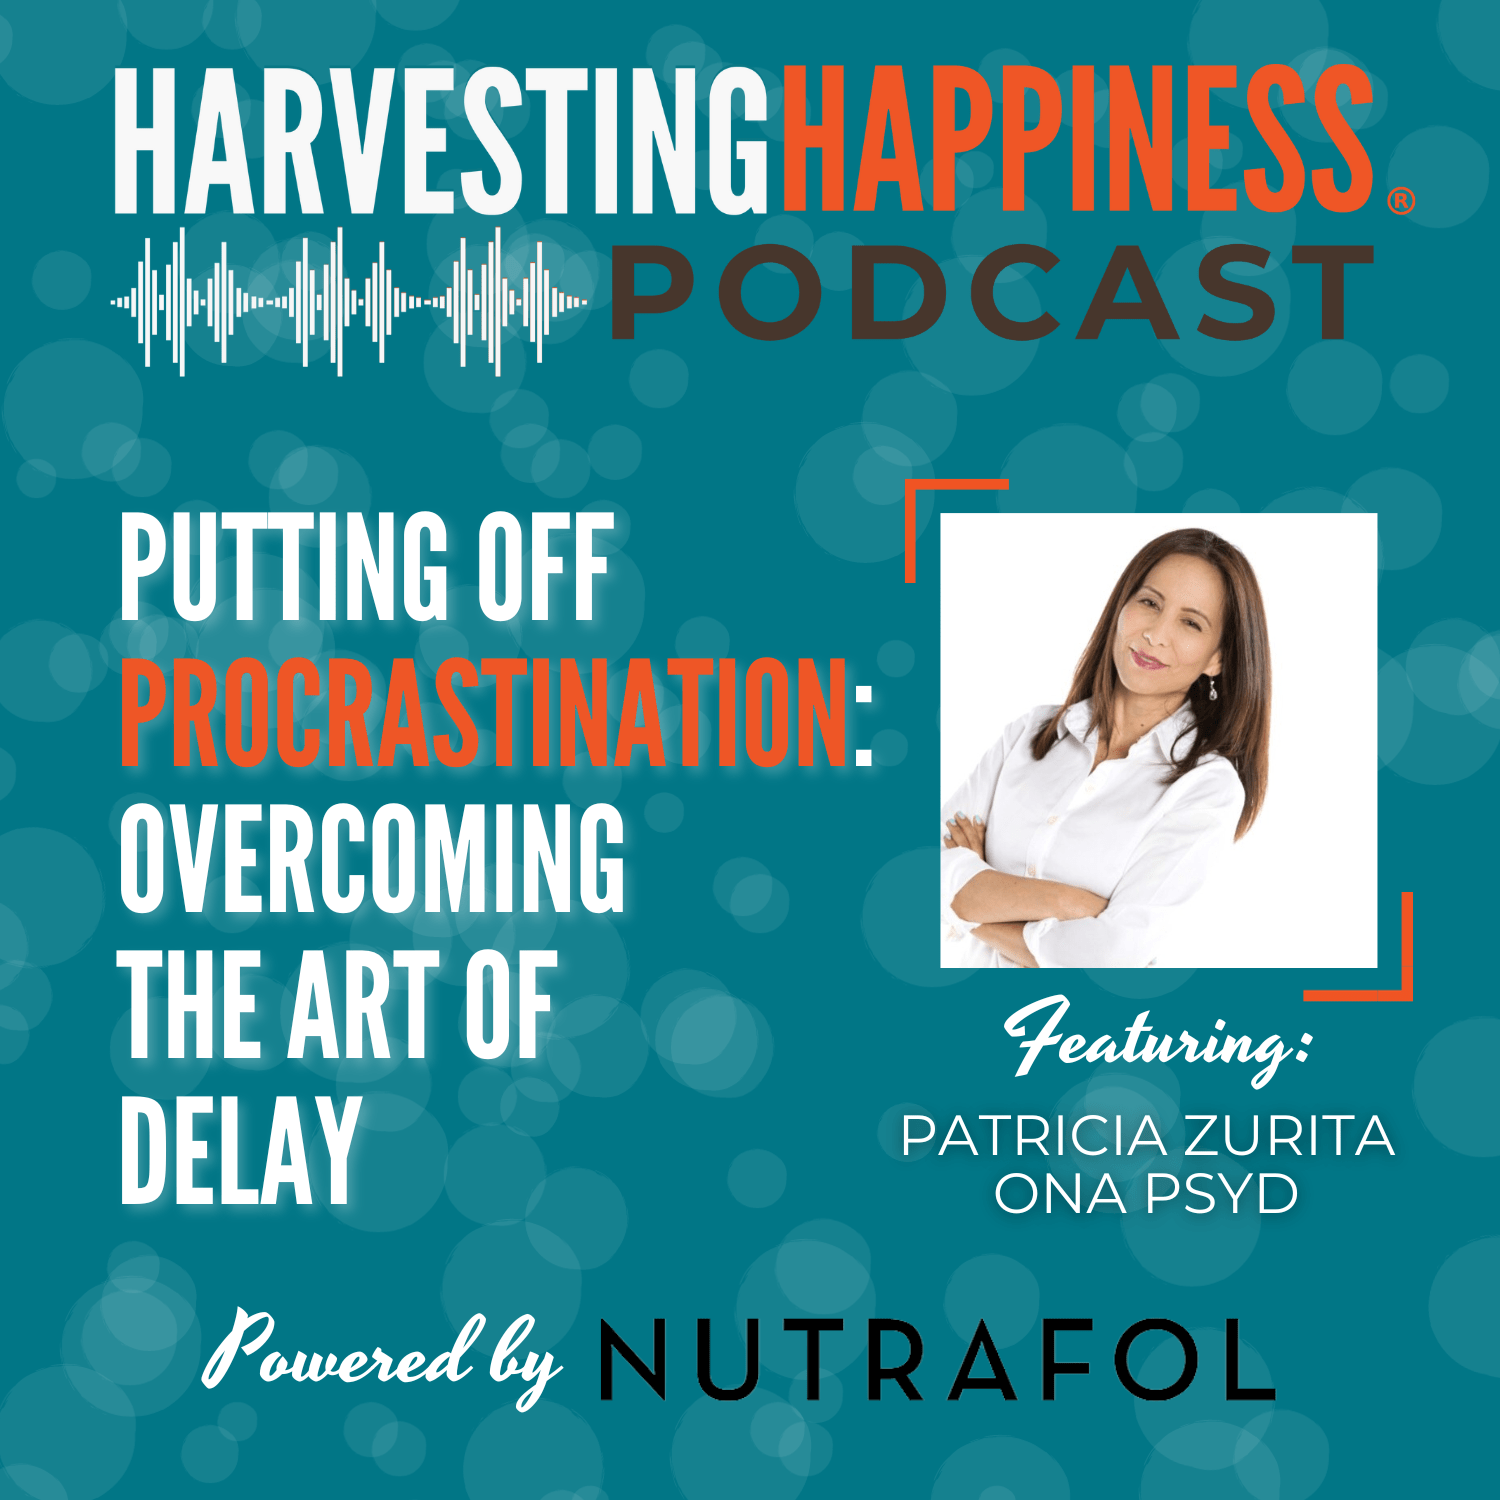 podcast episode about procrastination with Patricia Zurita Ona, sponsored by Nutrafol